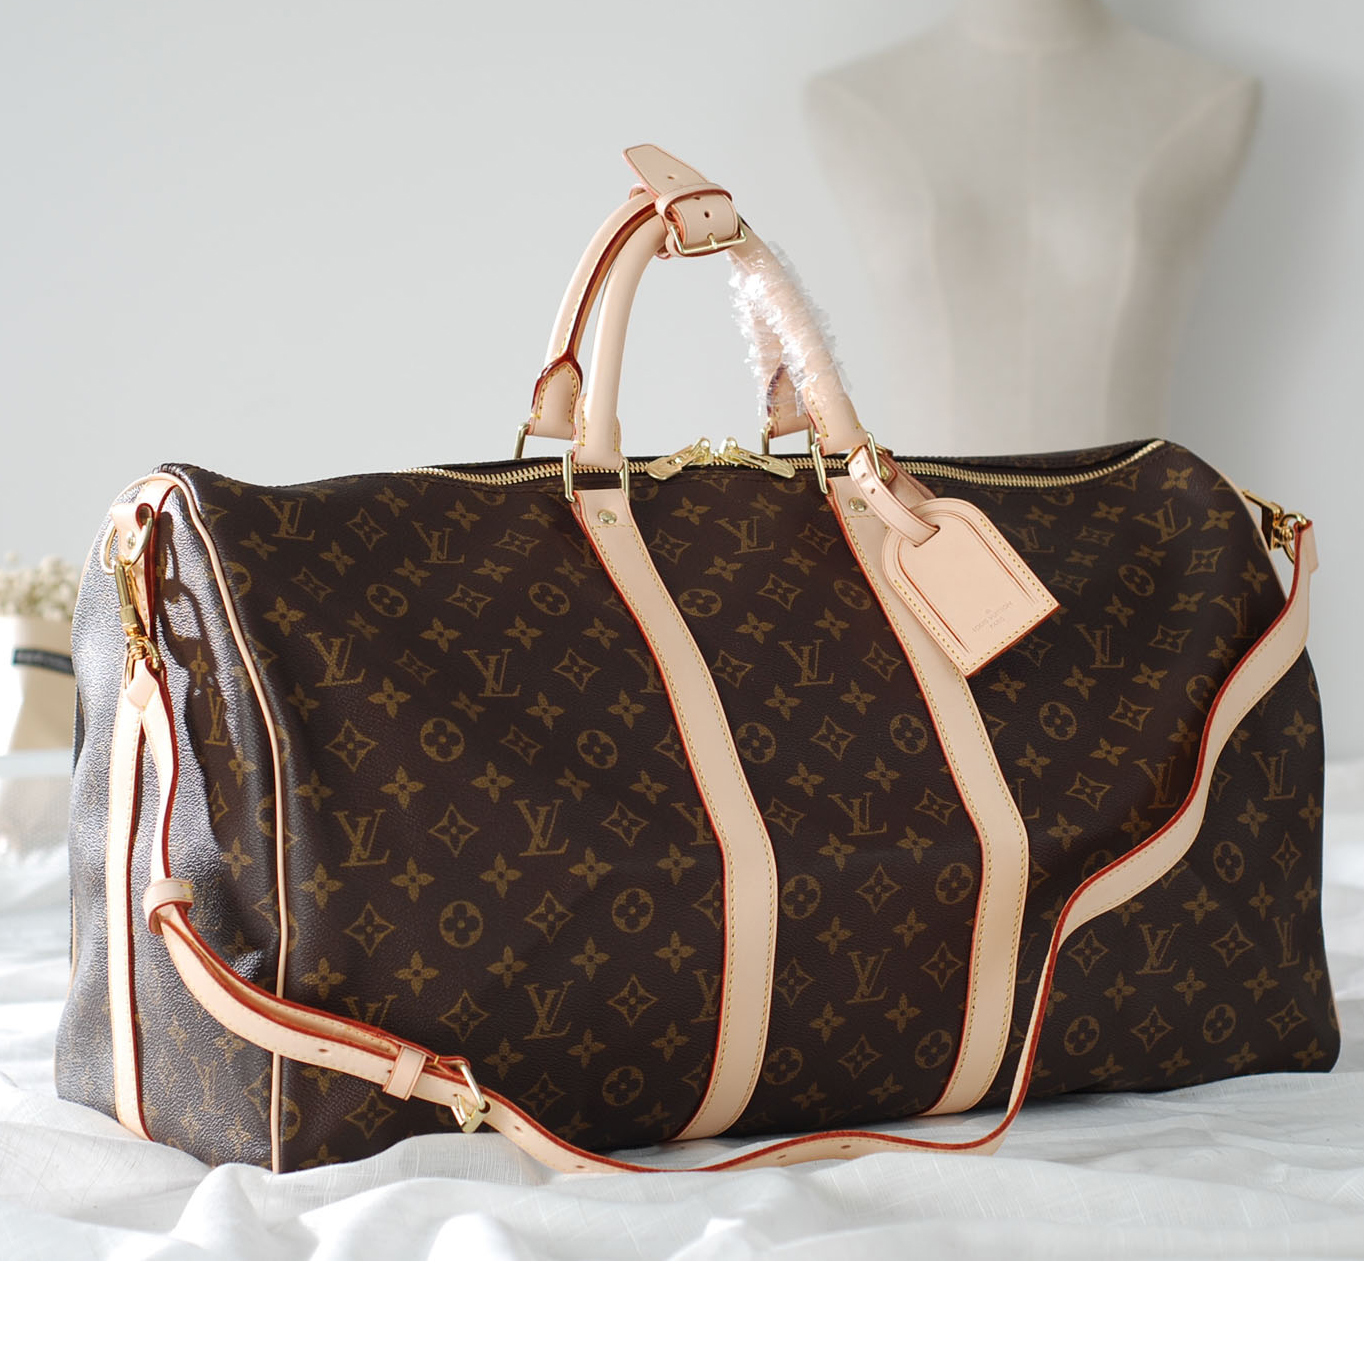 How To Store Louis Vuitton Duffle Bag | Wydział Cybernetyki